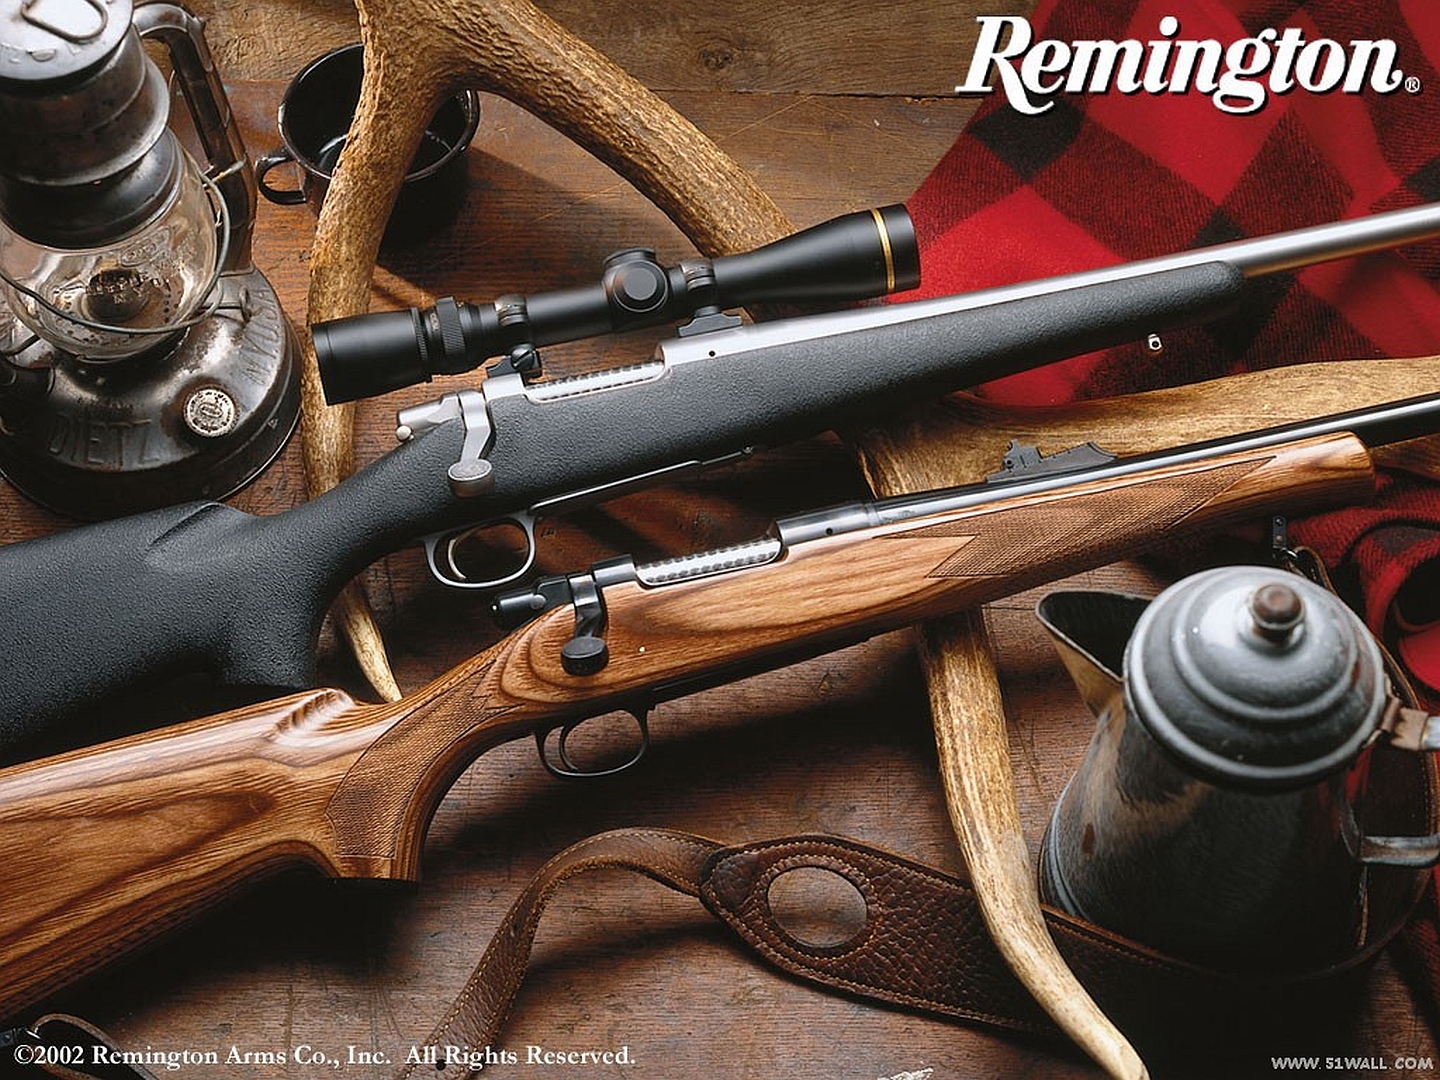 Remington Pistol Pics, Weapons Collection